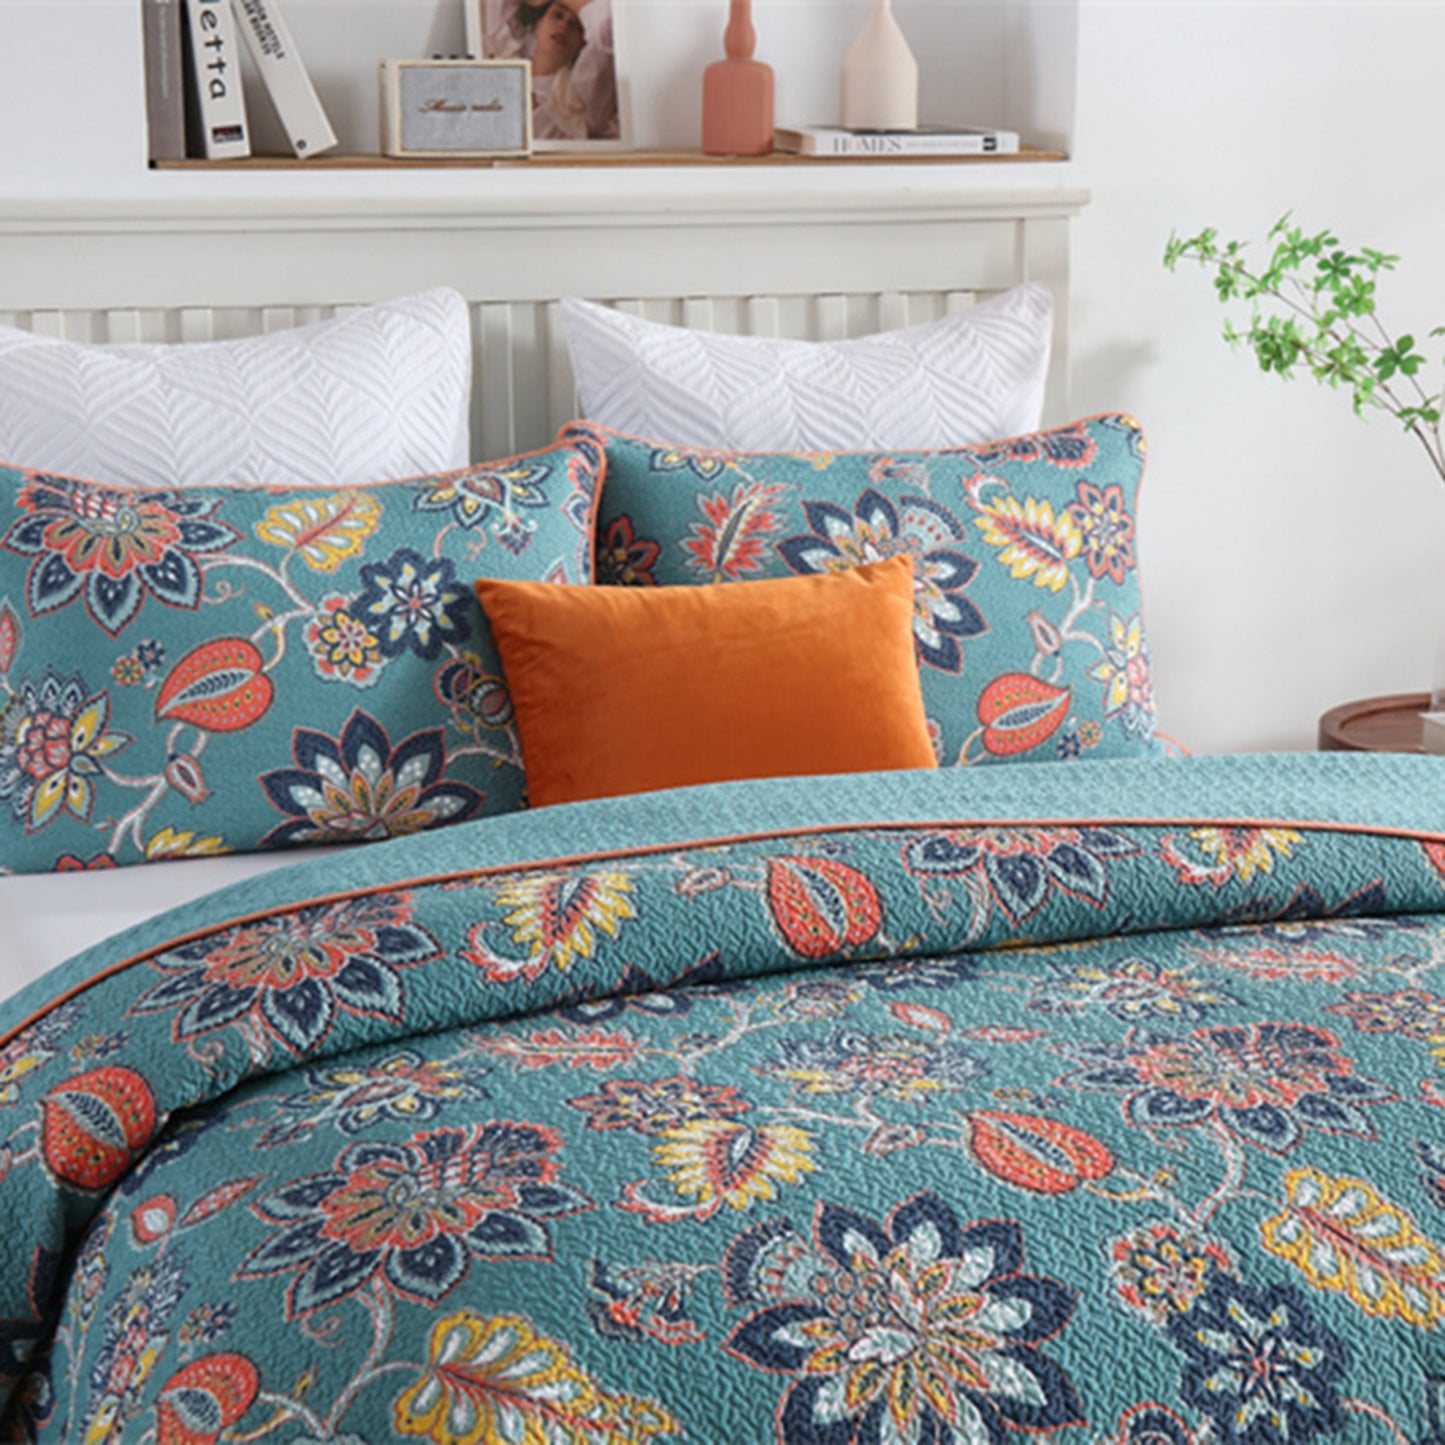 Pure Cotton Retro Floral Patterns 3 Pieces Quilt Set with 2 Pillowcases